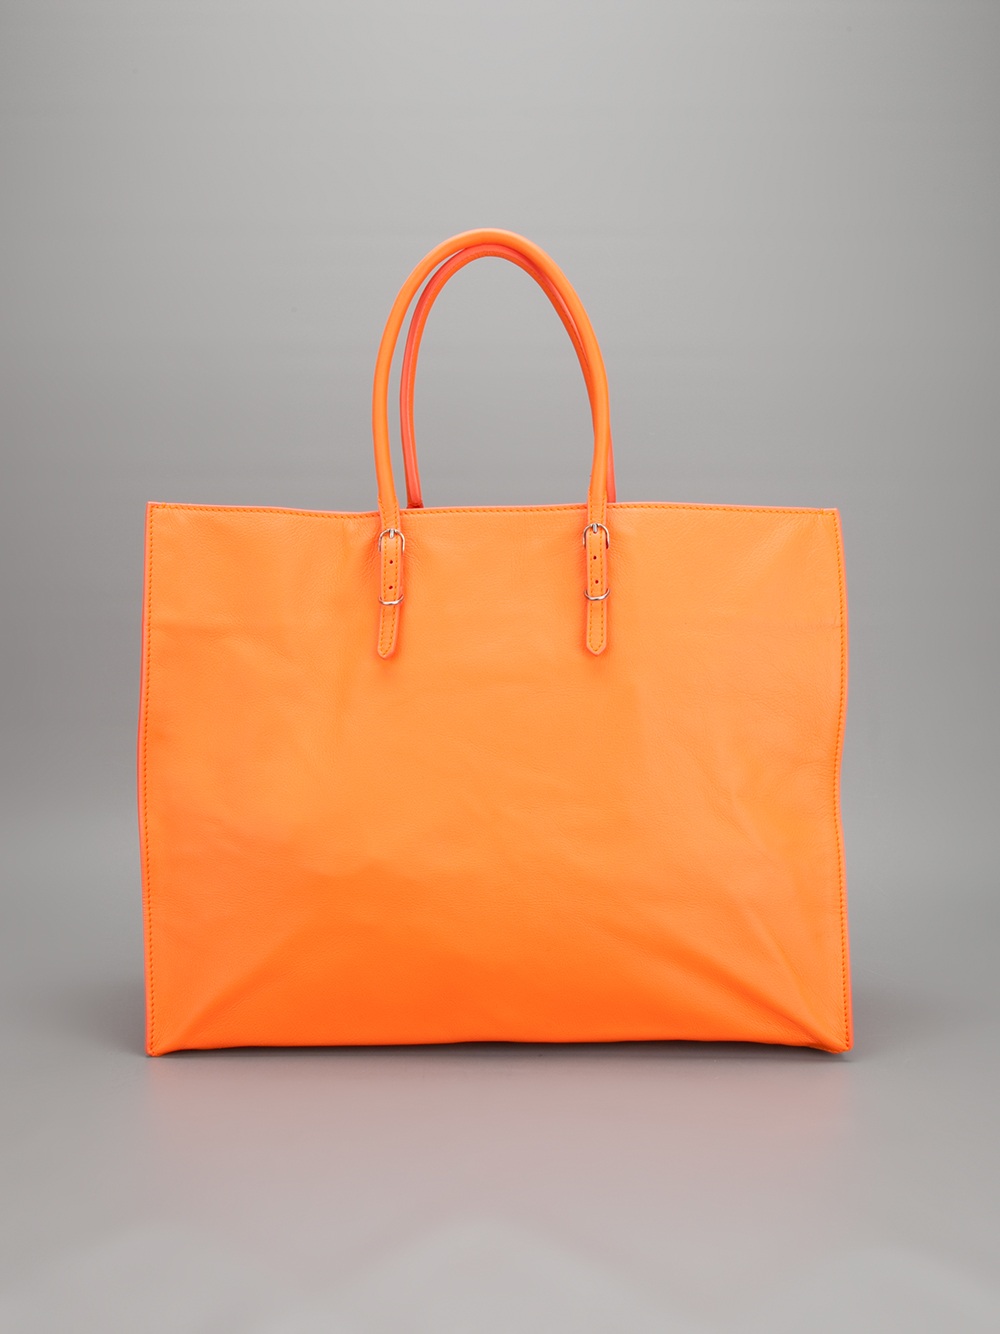 Balenciaga Tote Bag in Orange - Lyst